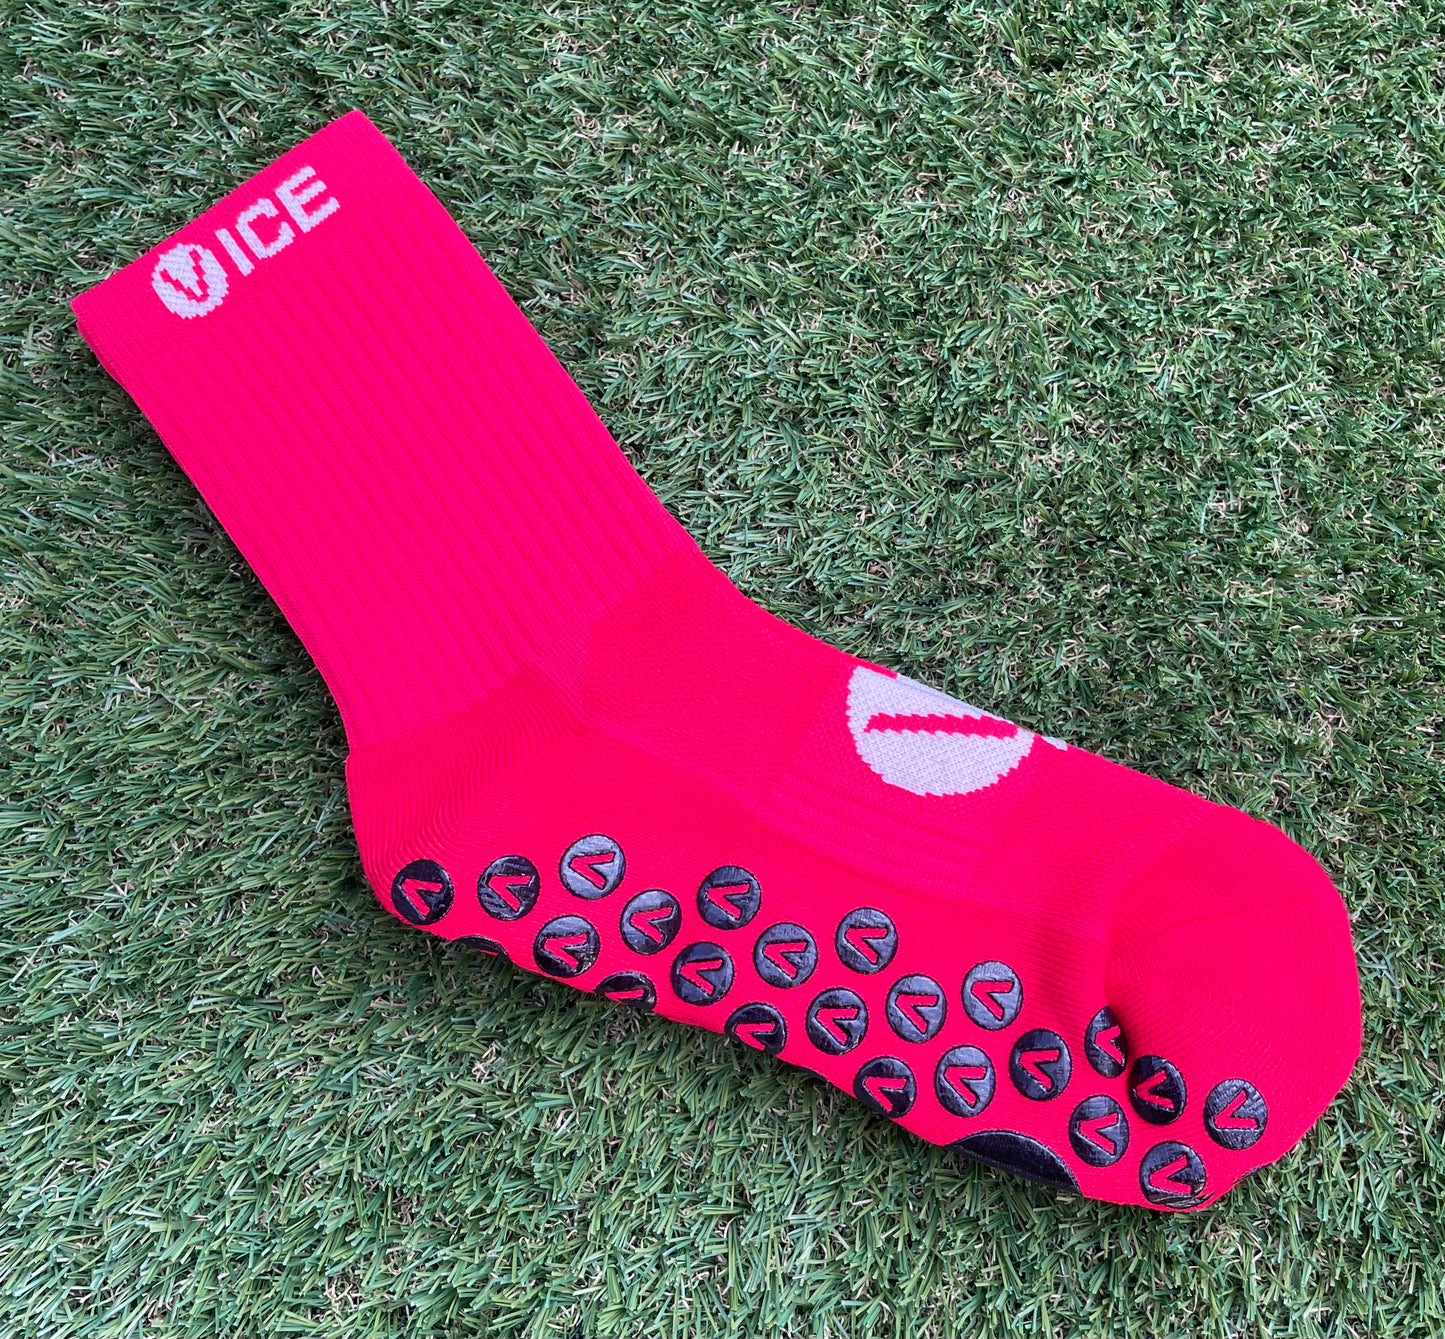 Vice Grip Socks